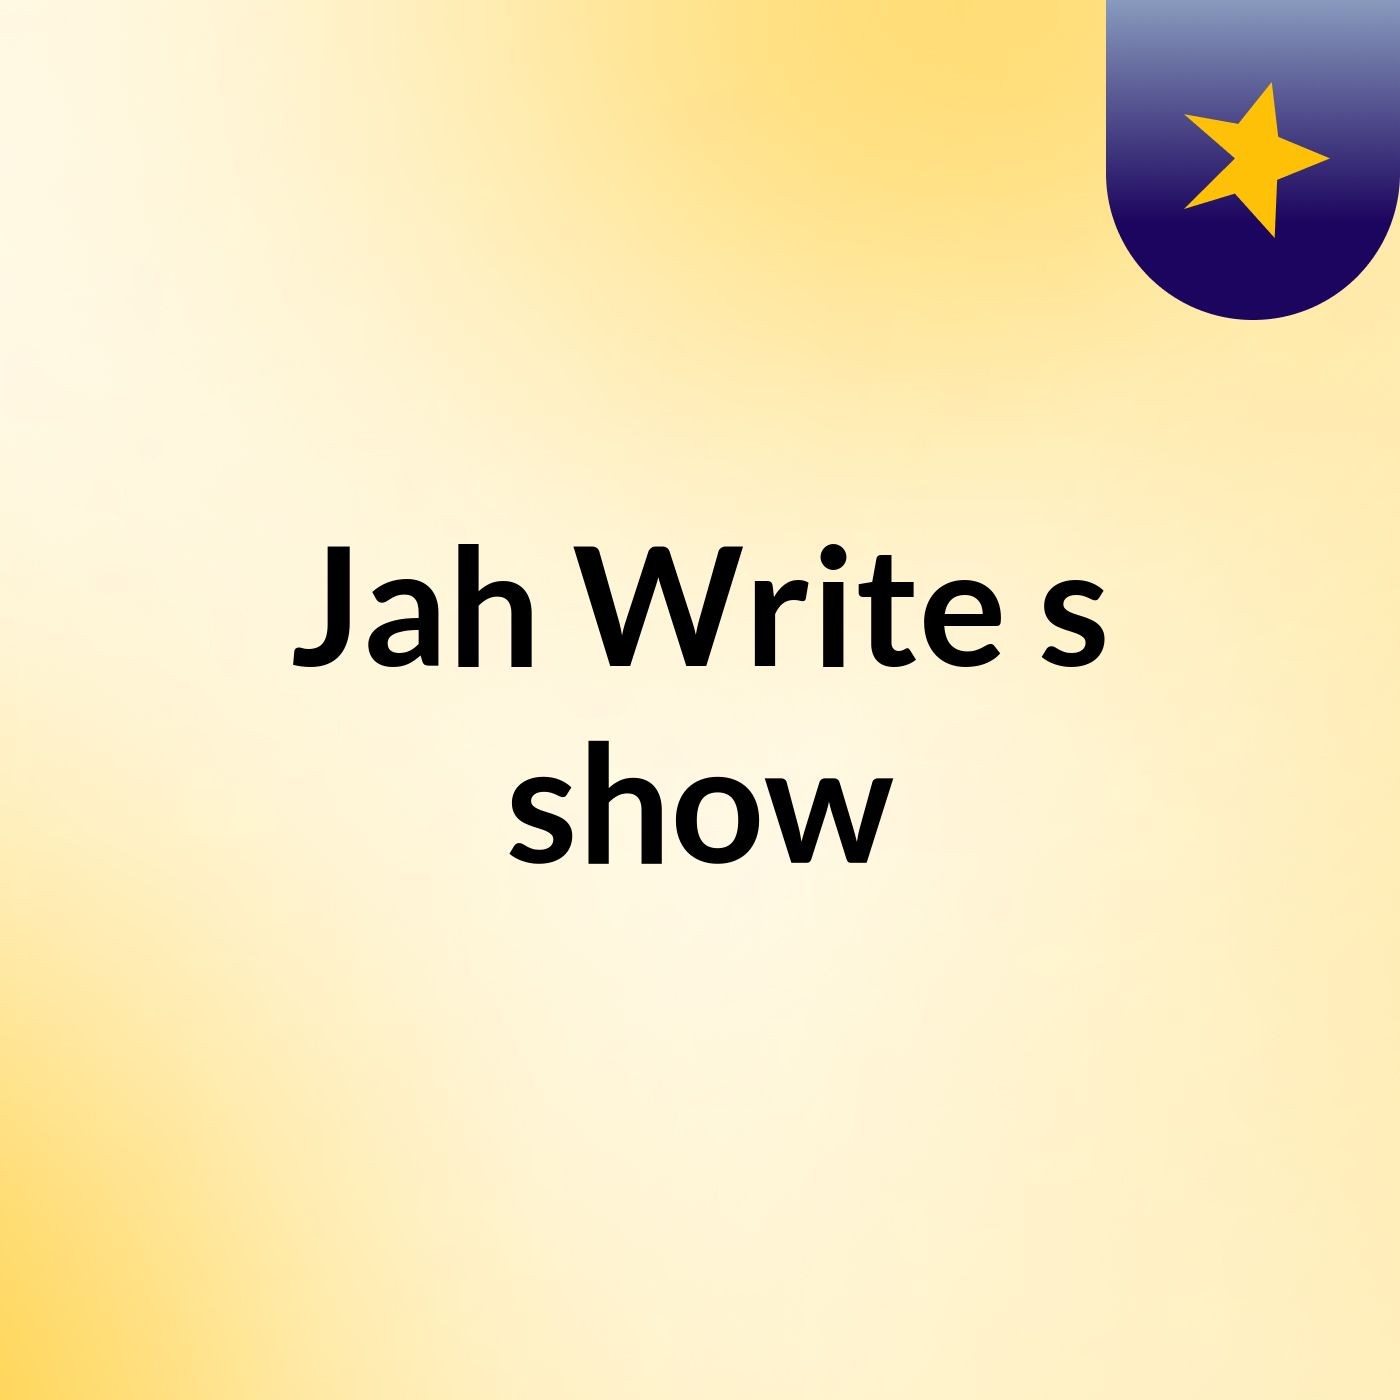 Episode 4 - Jah Write's show